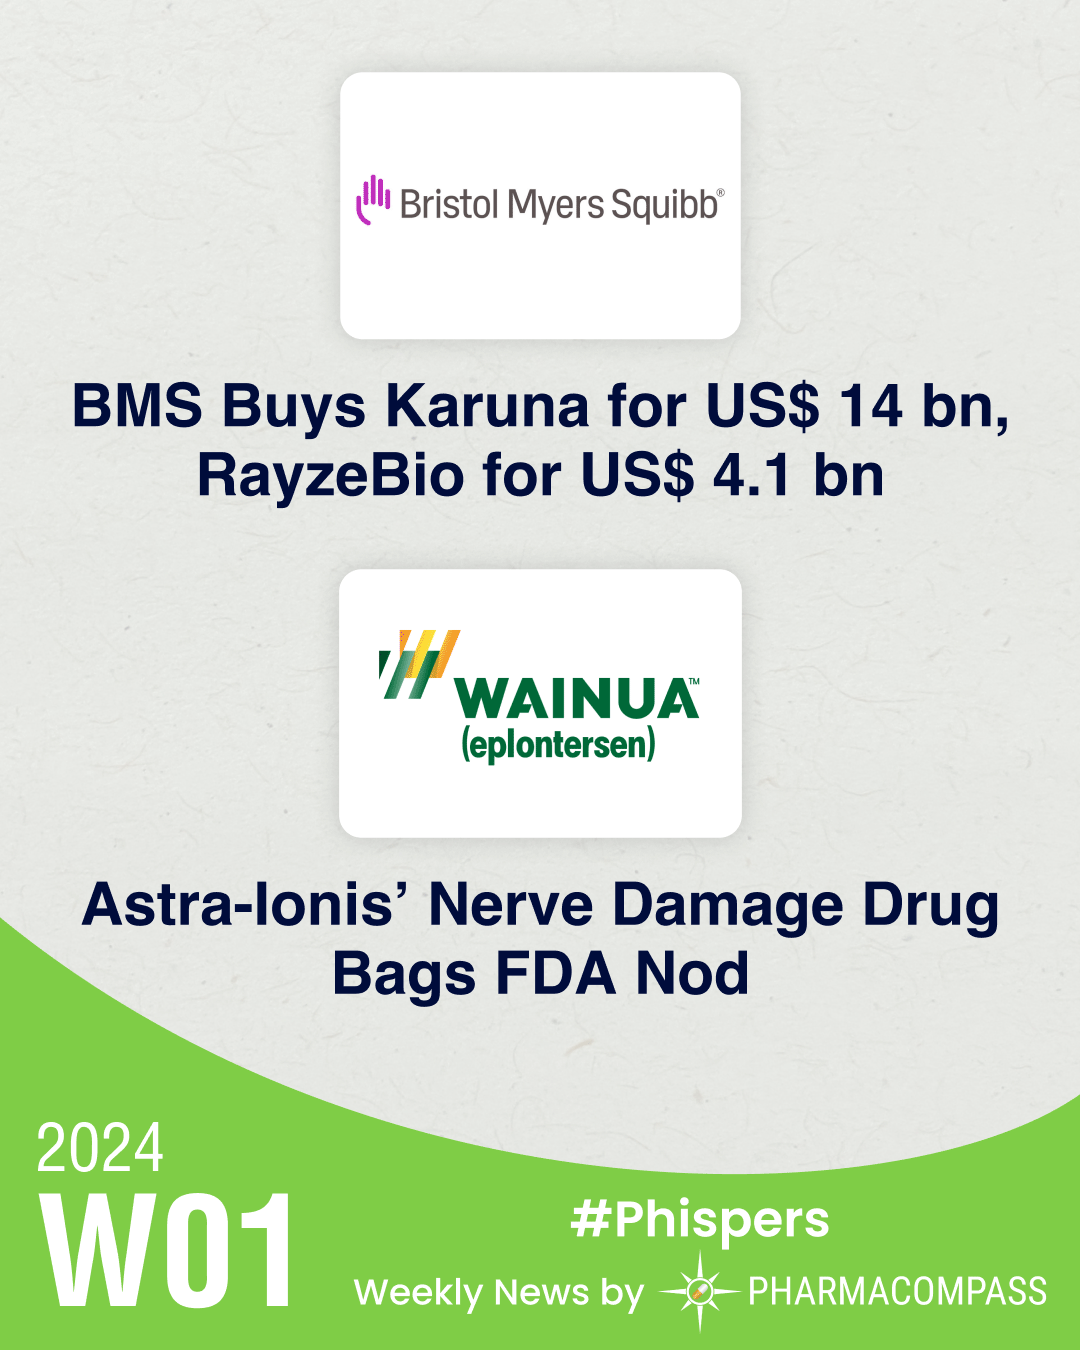 BMS buys Karuna for US$ 14 billion; Astra-Ionis’ nerve damage drug bags FDA nod